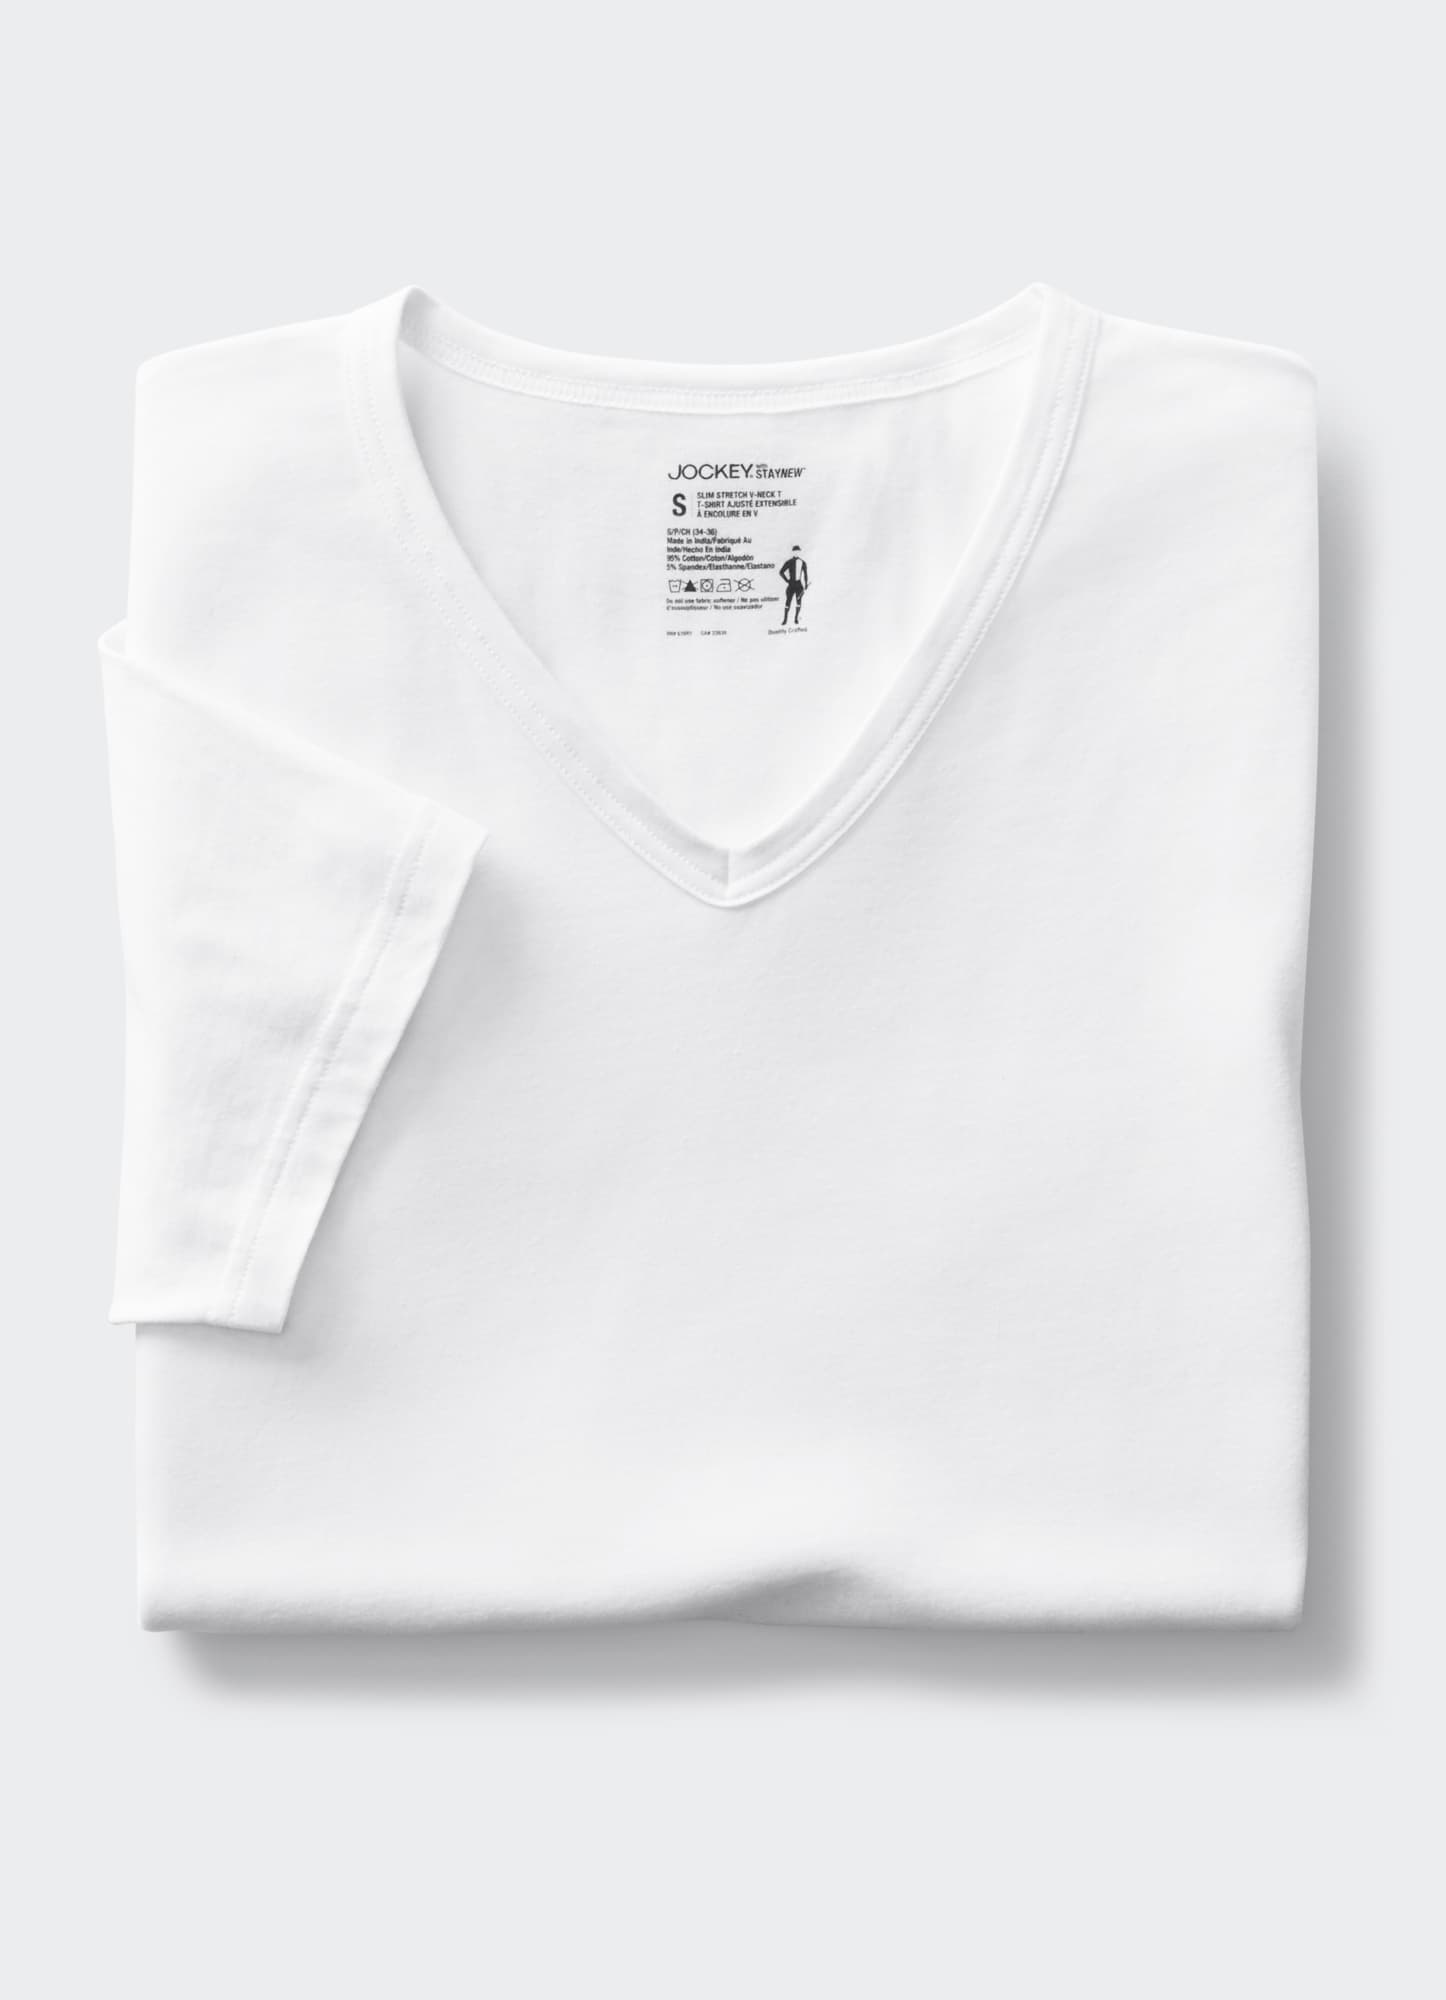 Laydown of Cotton Stretch V-neck T-shirt